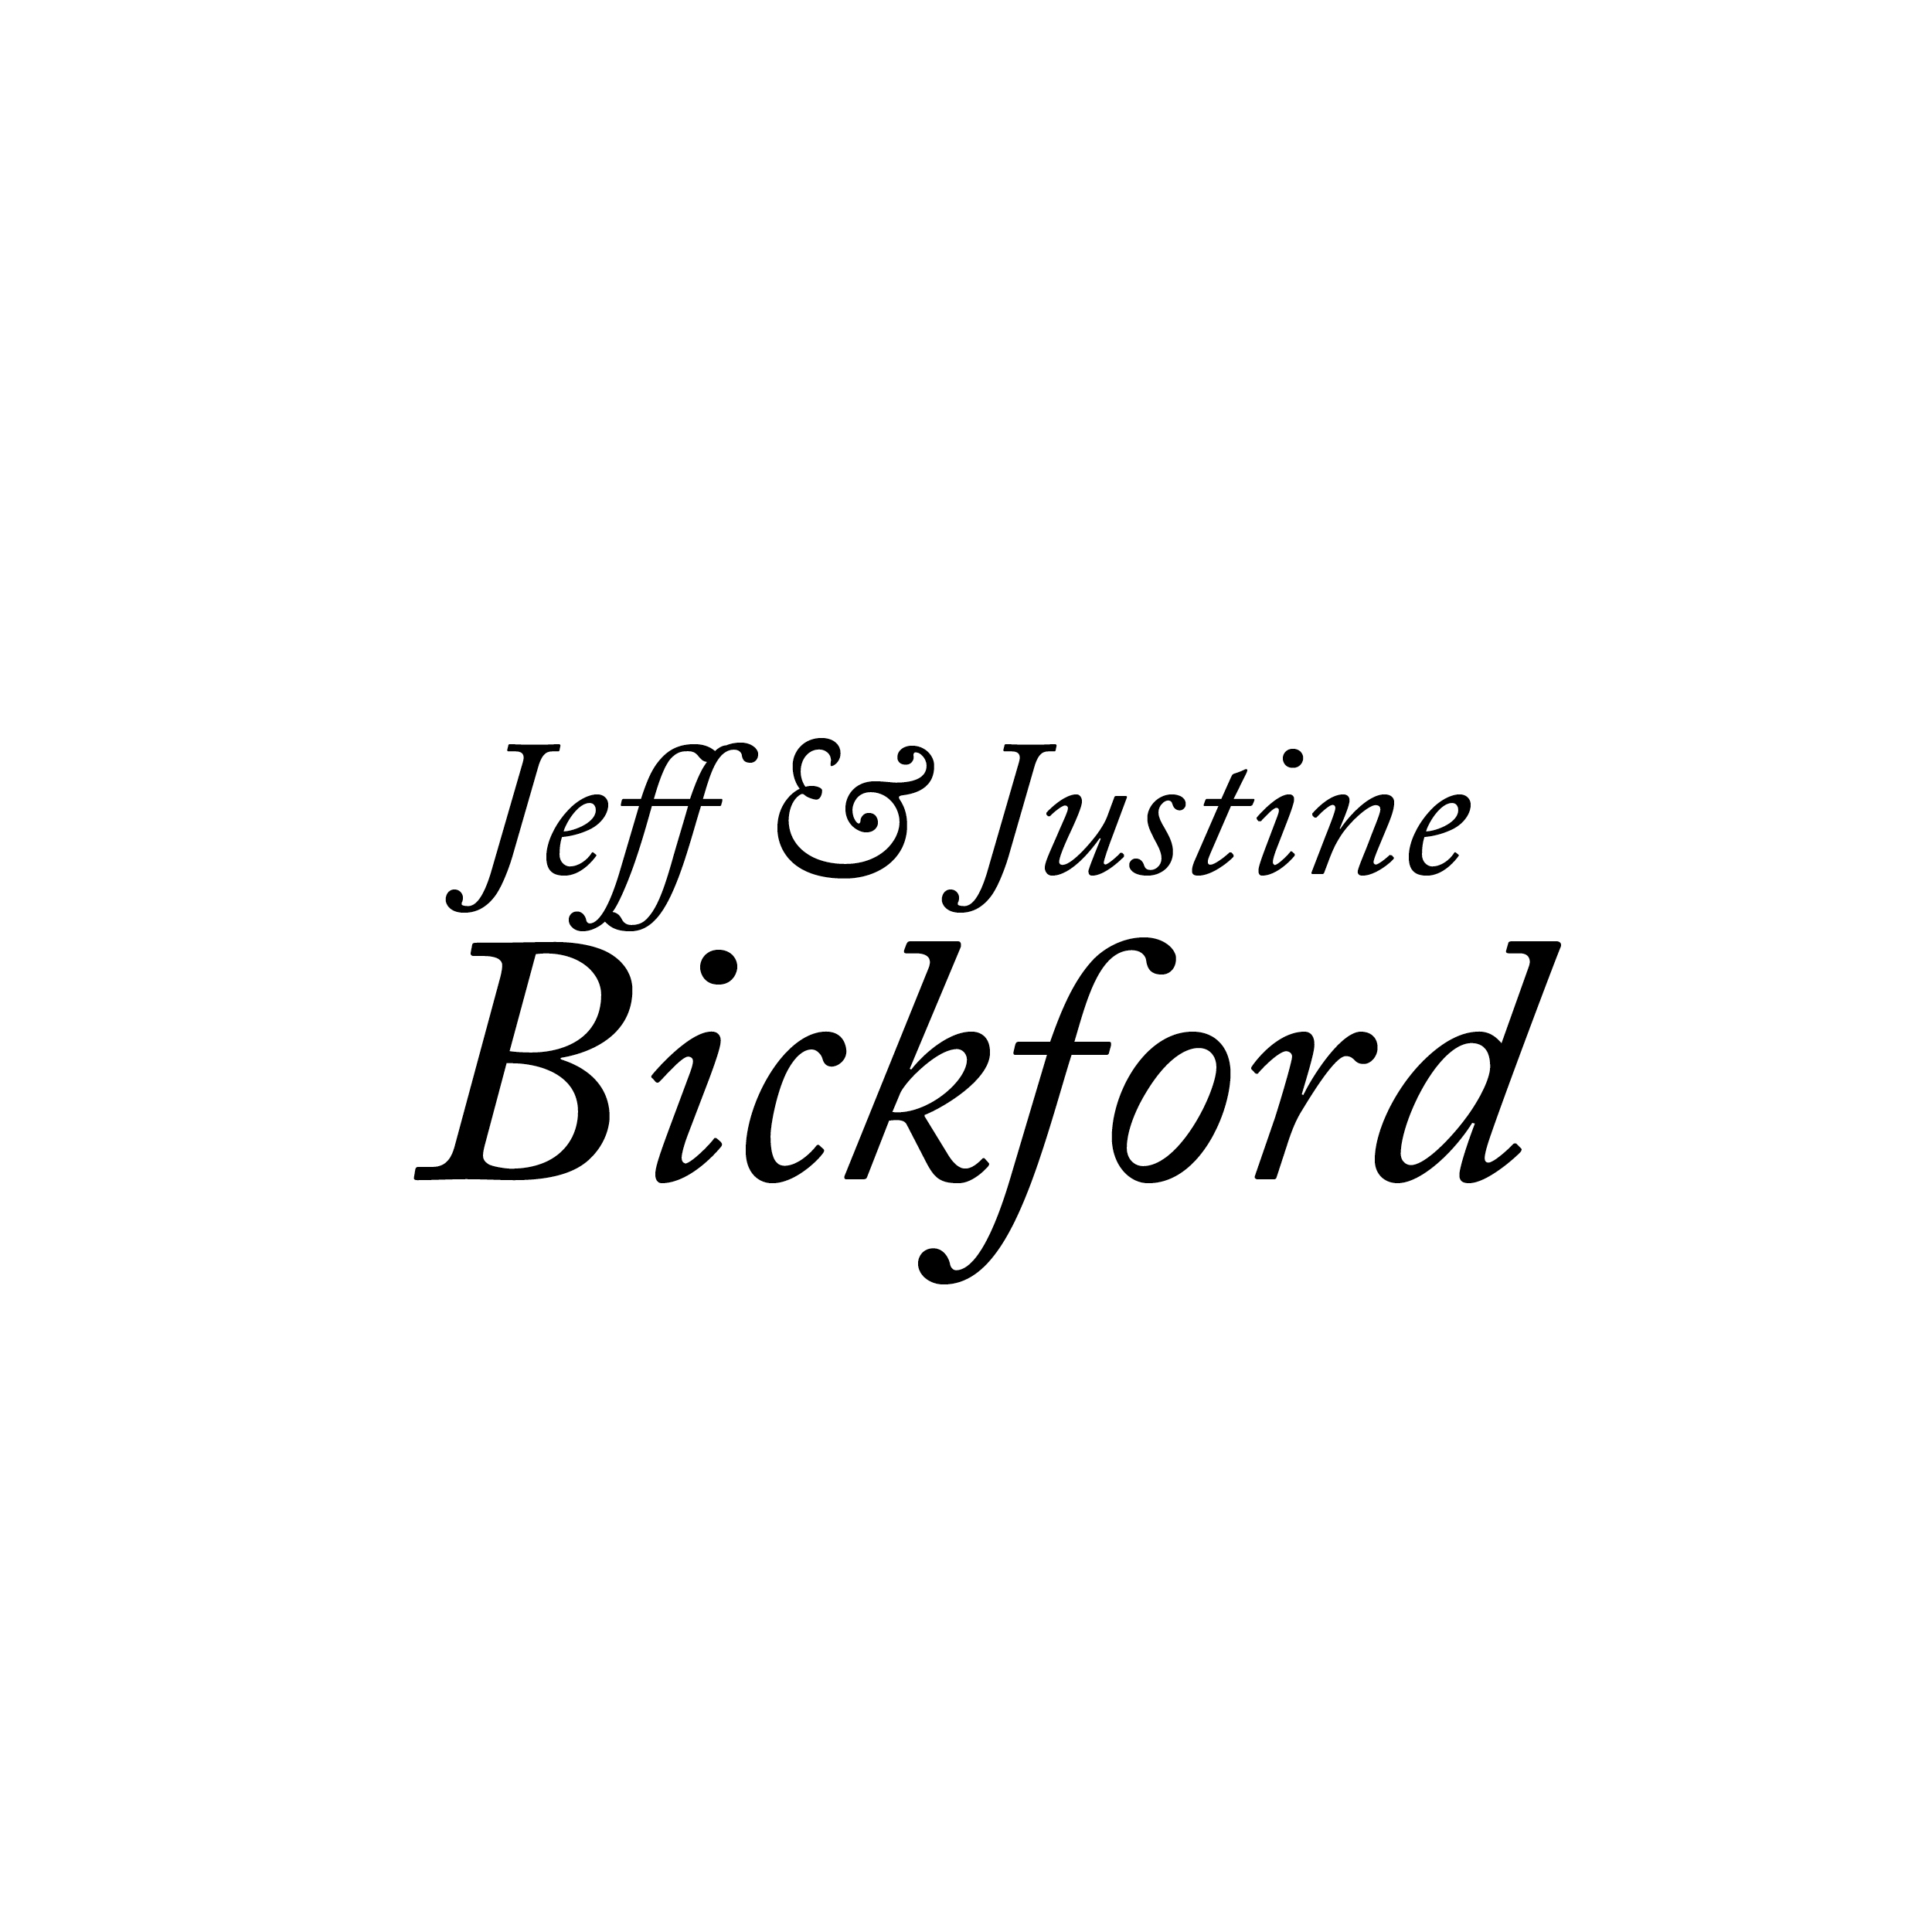 Jeff and Justine Bickford